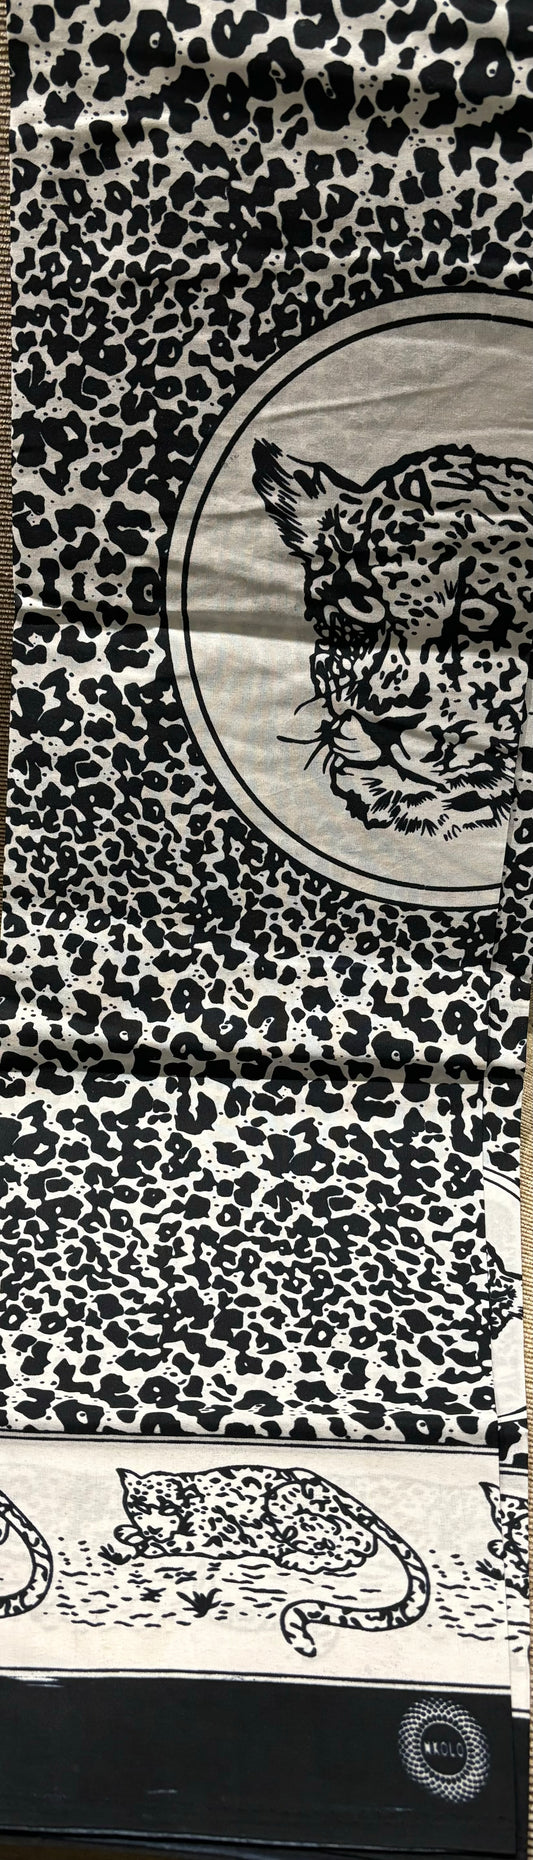 Black Leopard Print Ancestral Cloth